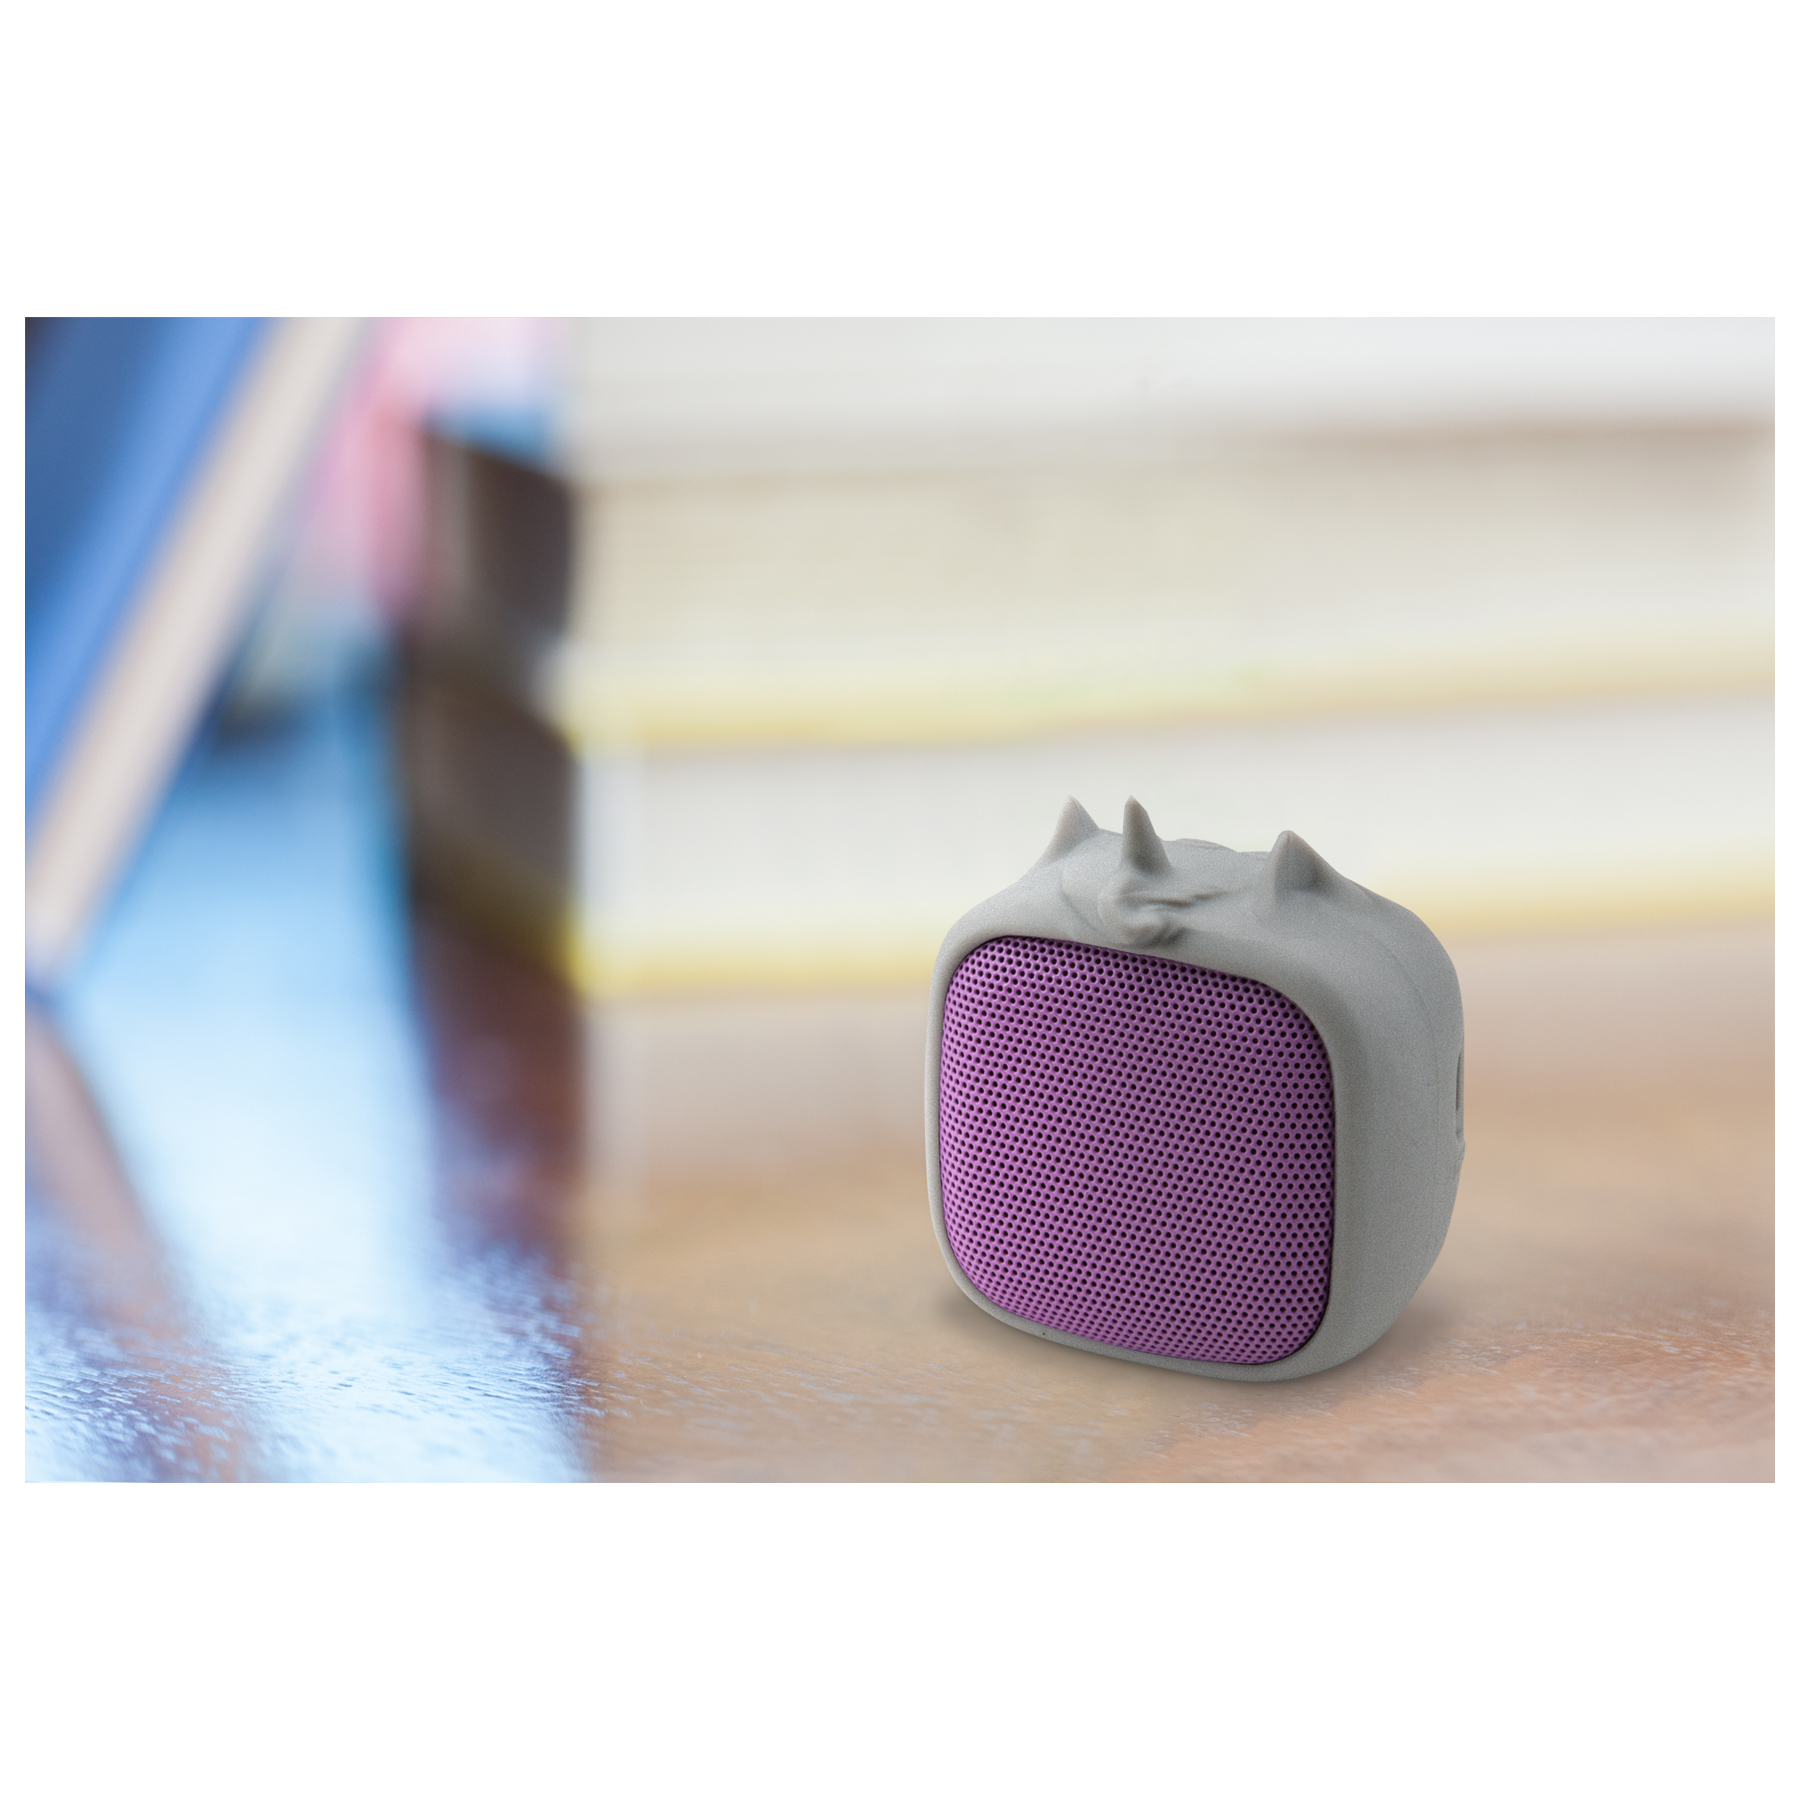 iLive Bluetooth Wild Tailz Unicorn Wireless Speaker, Rechargeable, Grey/Purple, ISB19UNI - image 4 of 5